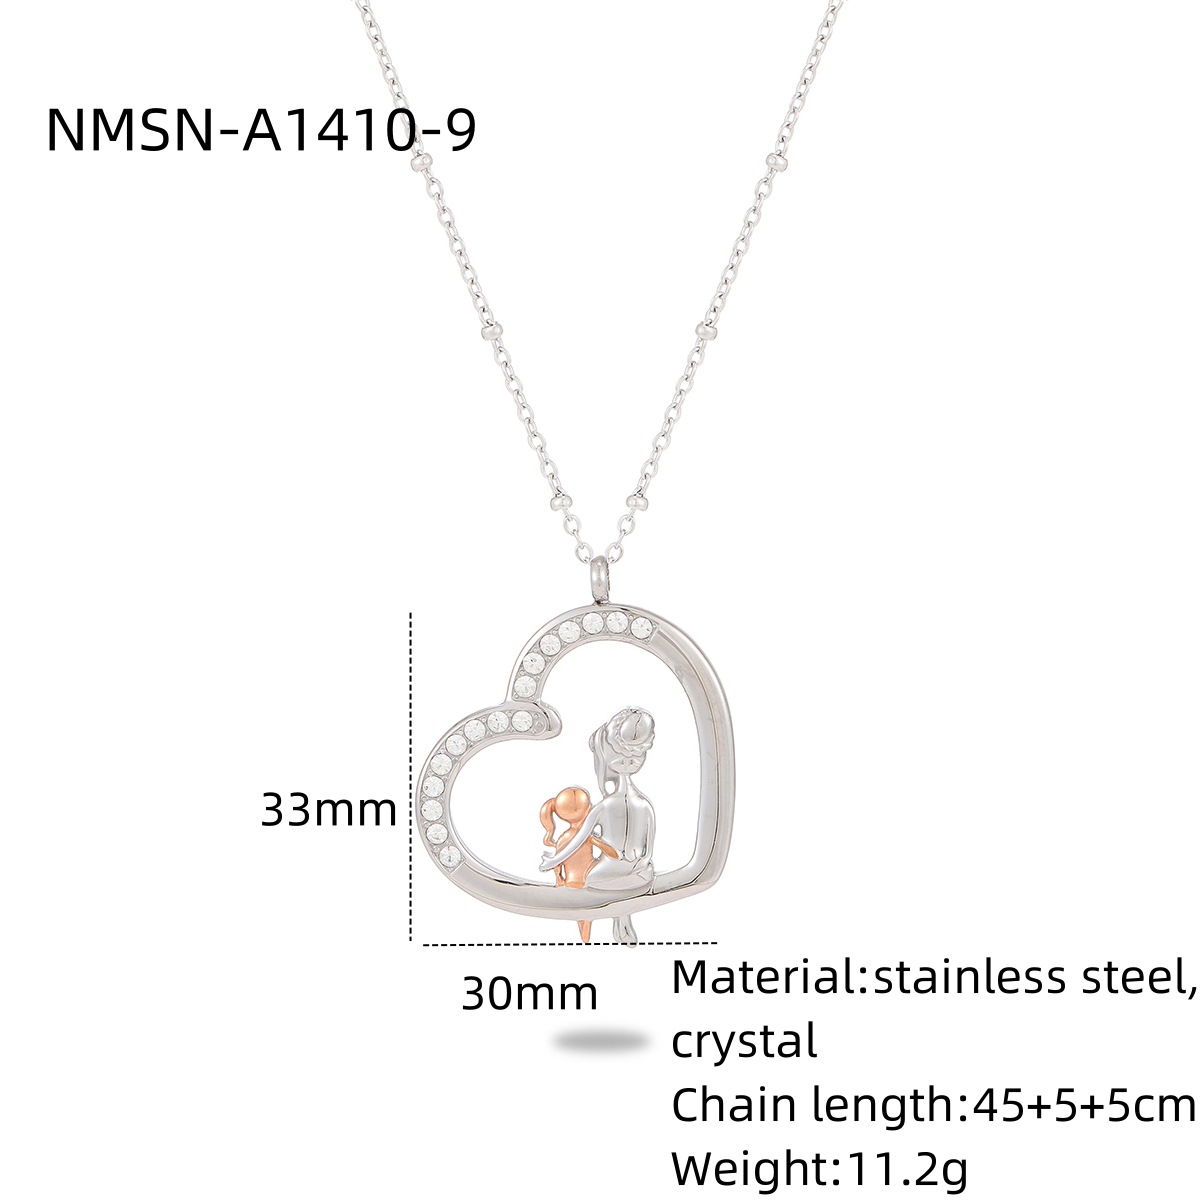 NMSN-A1410-9